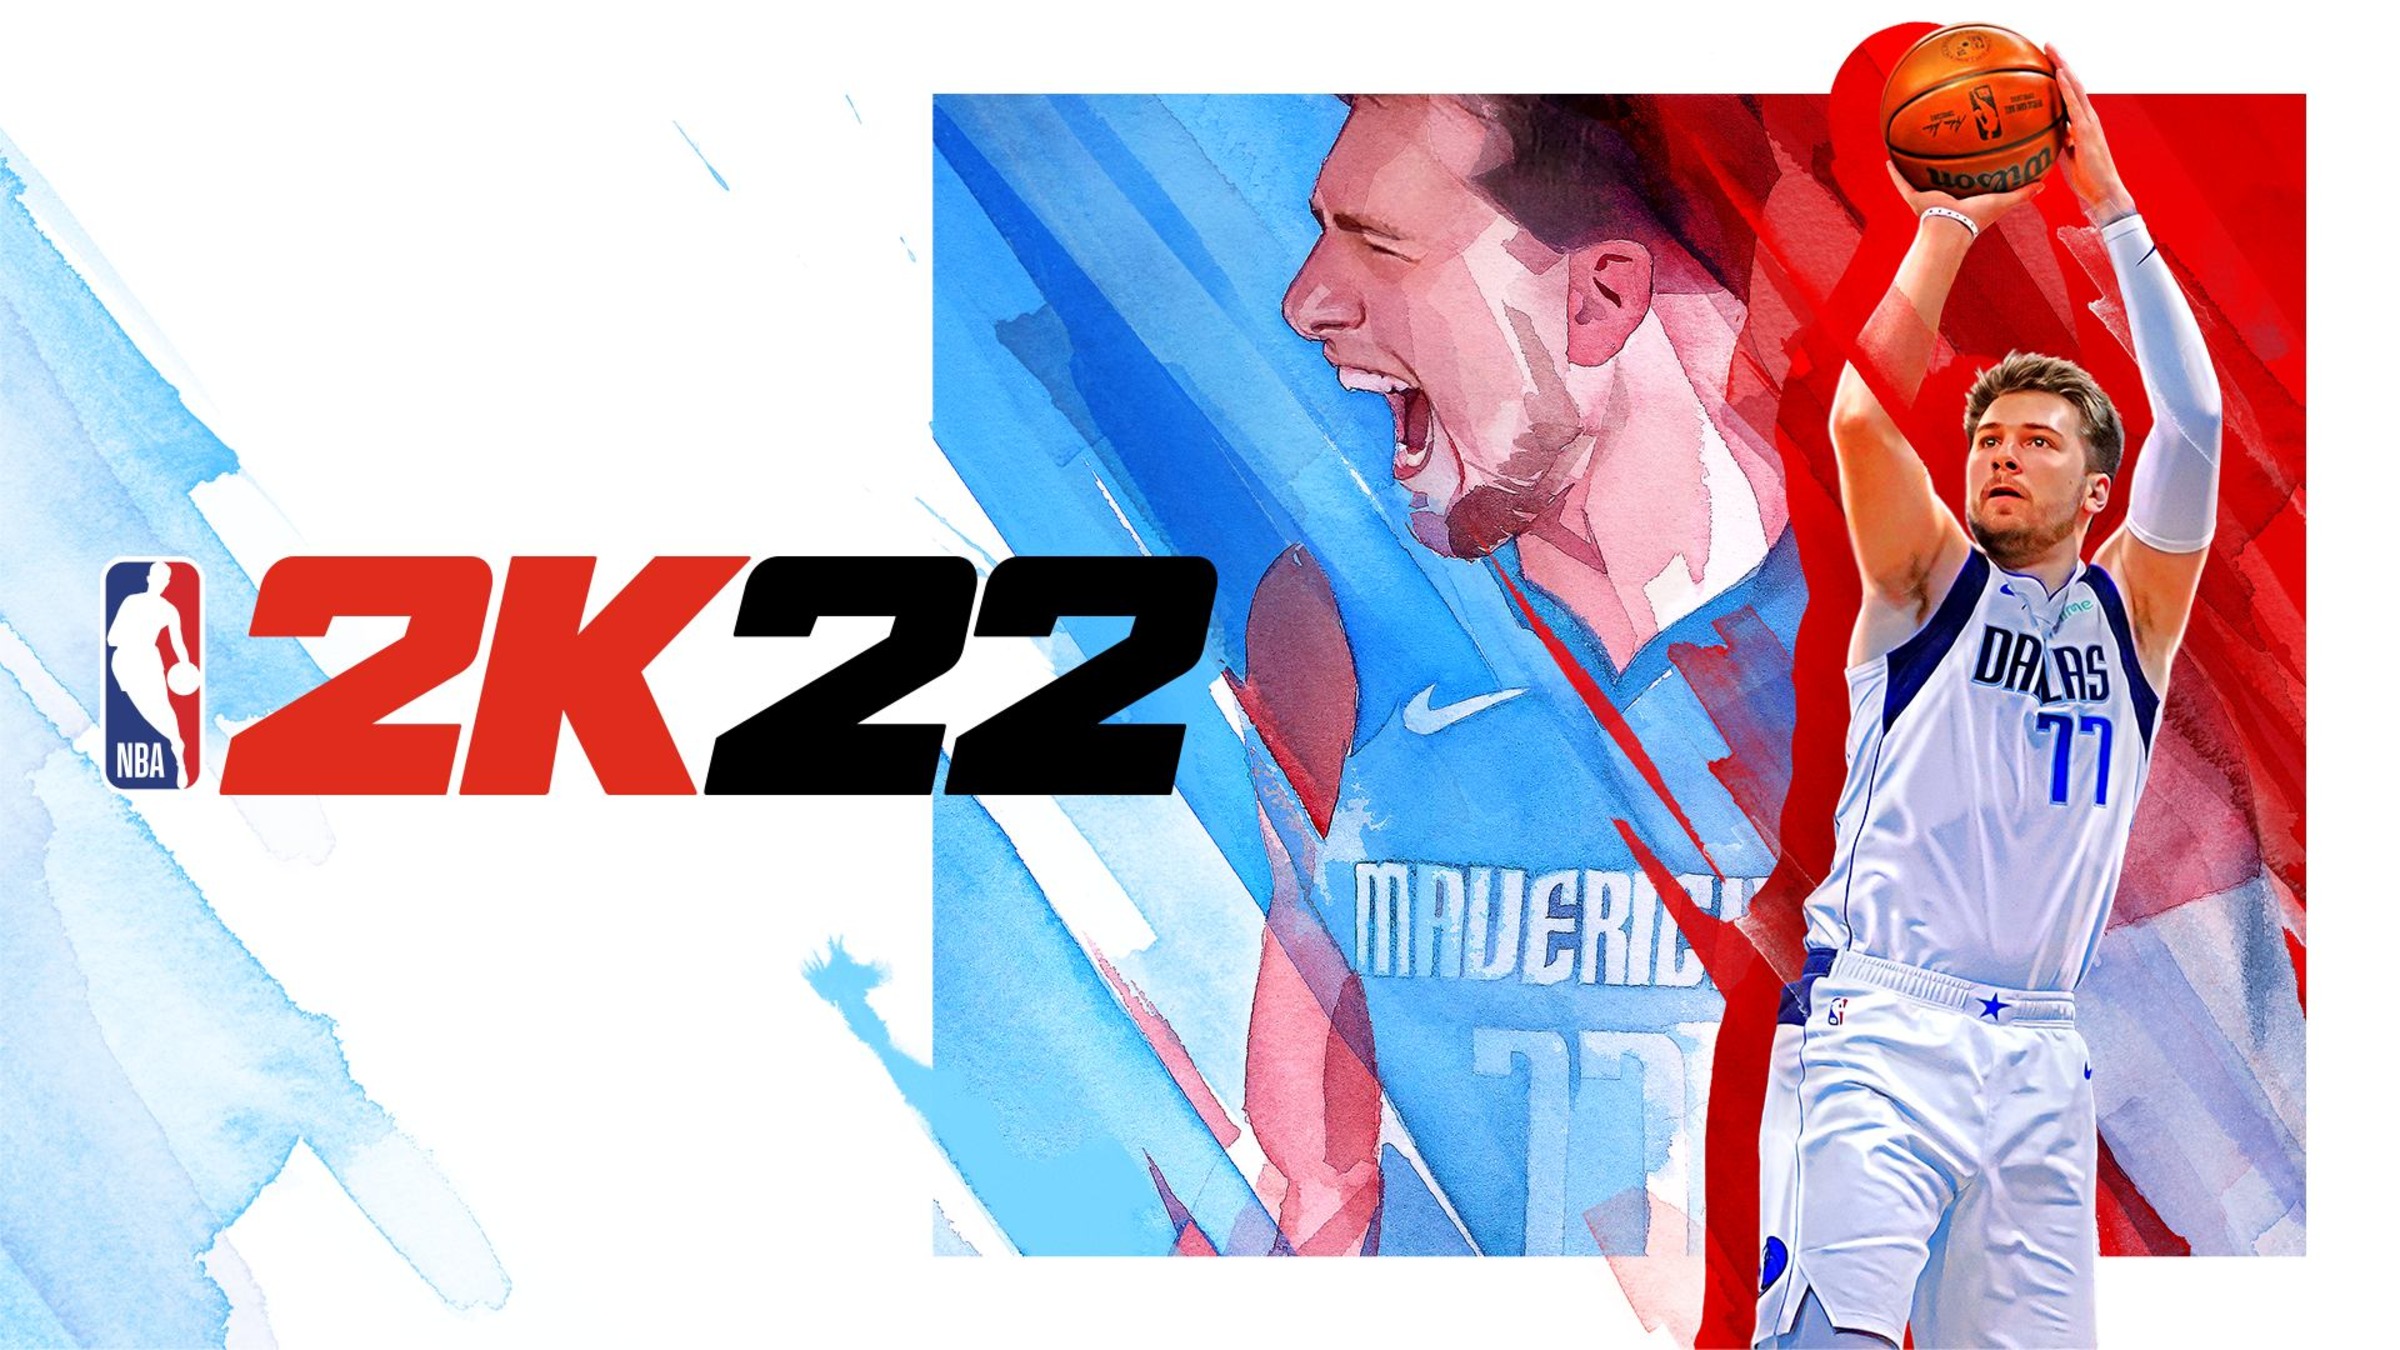 NBA 2K22 for Nintendo Switch - Nintendo Official Site